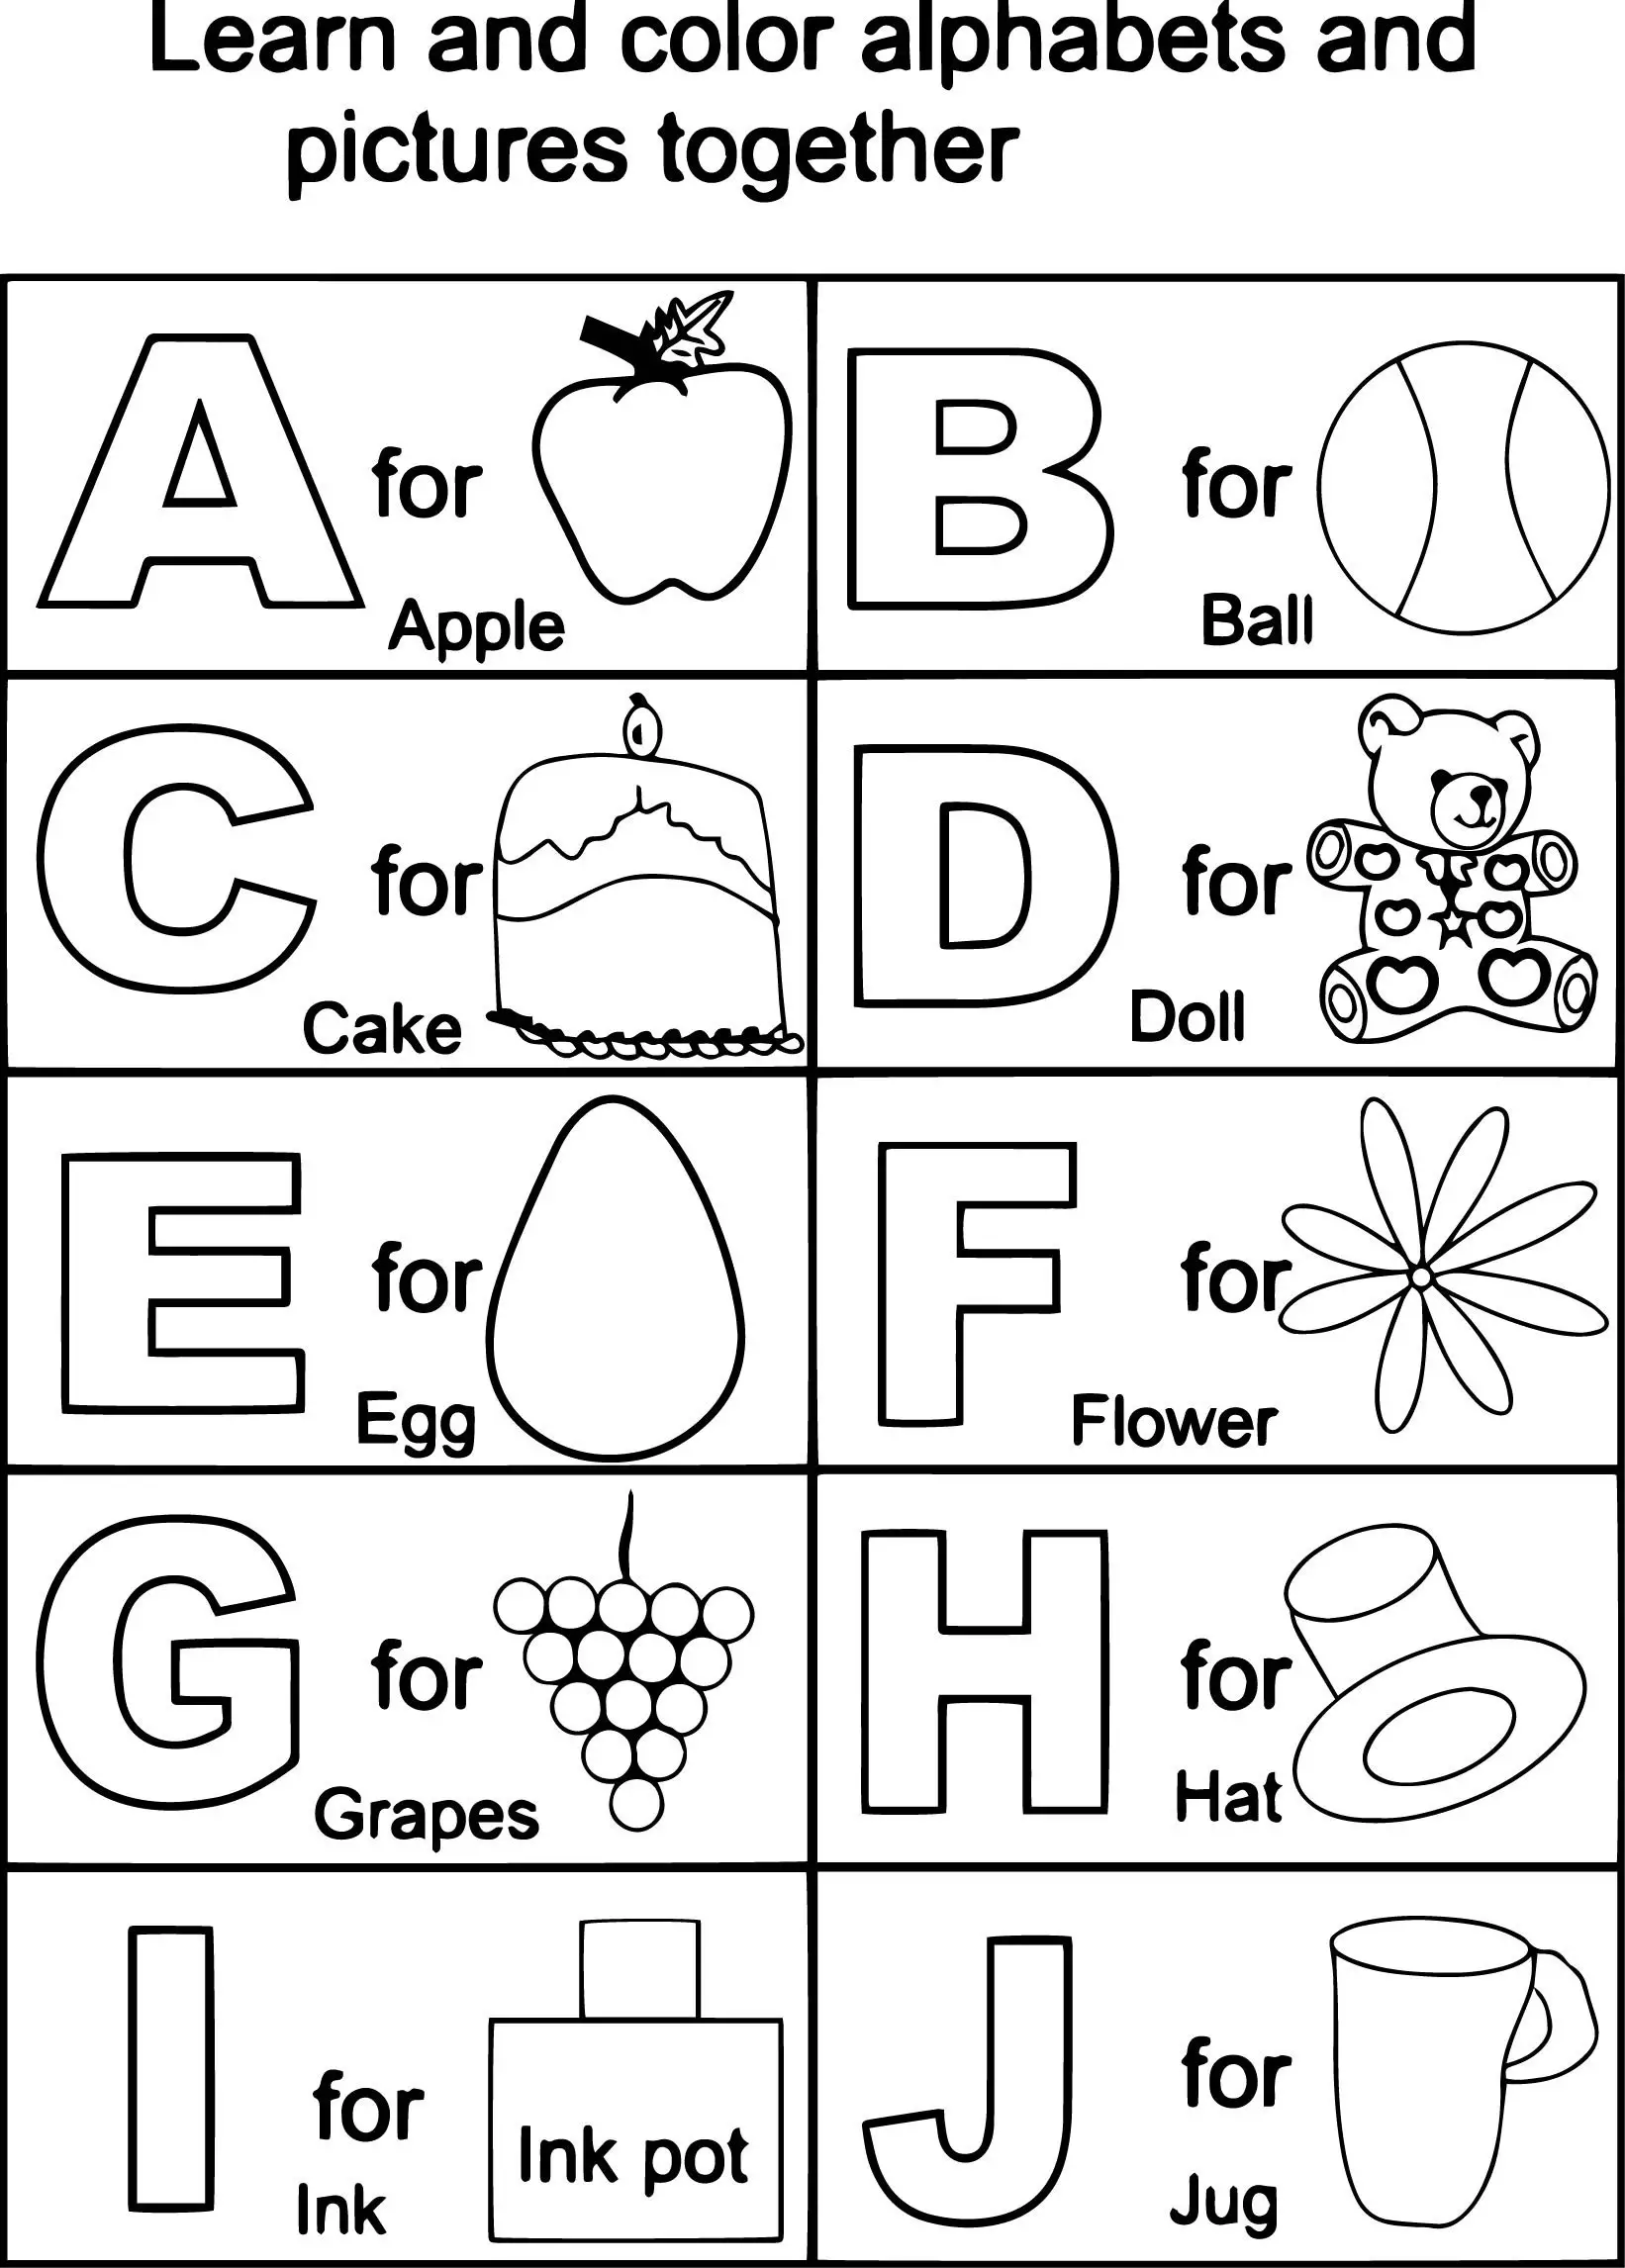 free-printable-alphabet-flash-cards-black-and-white-printable-word